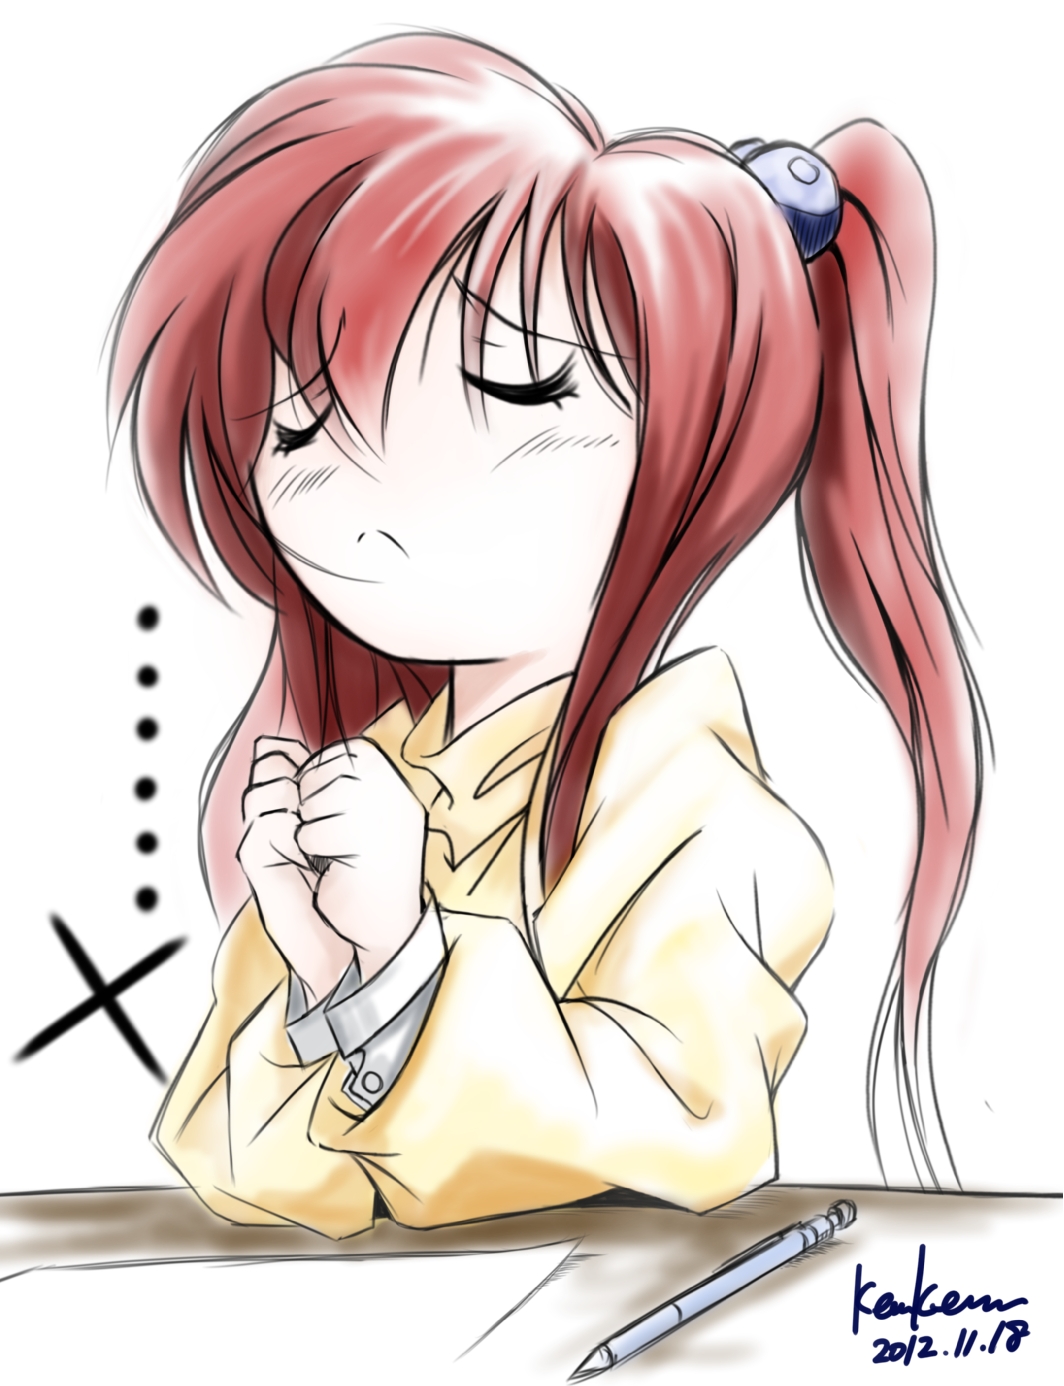 Anime girl praying drawing whit copic by Drowkas on DeviantArt